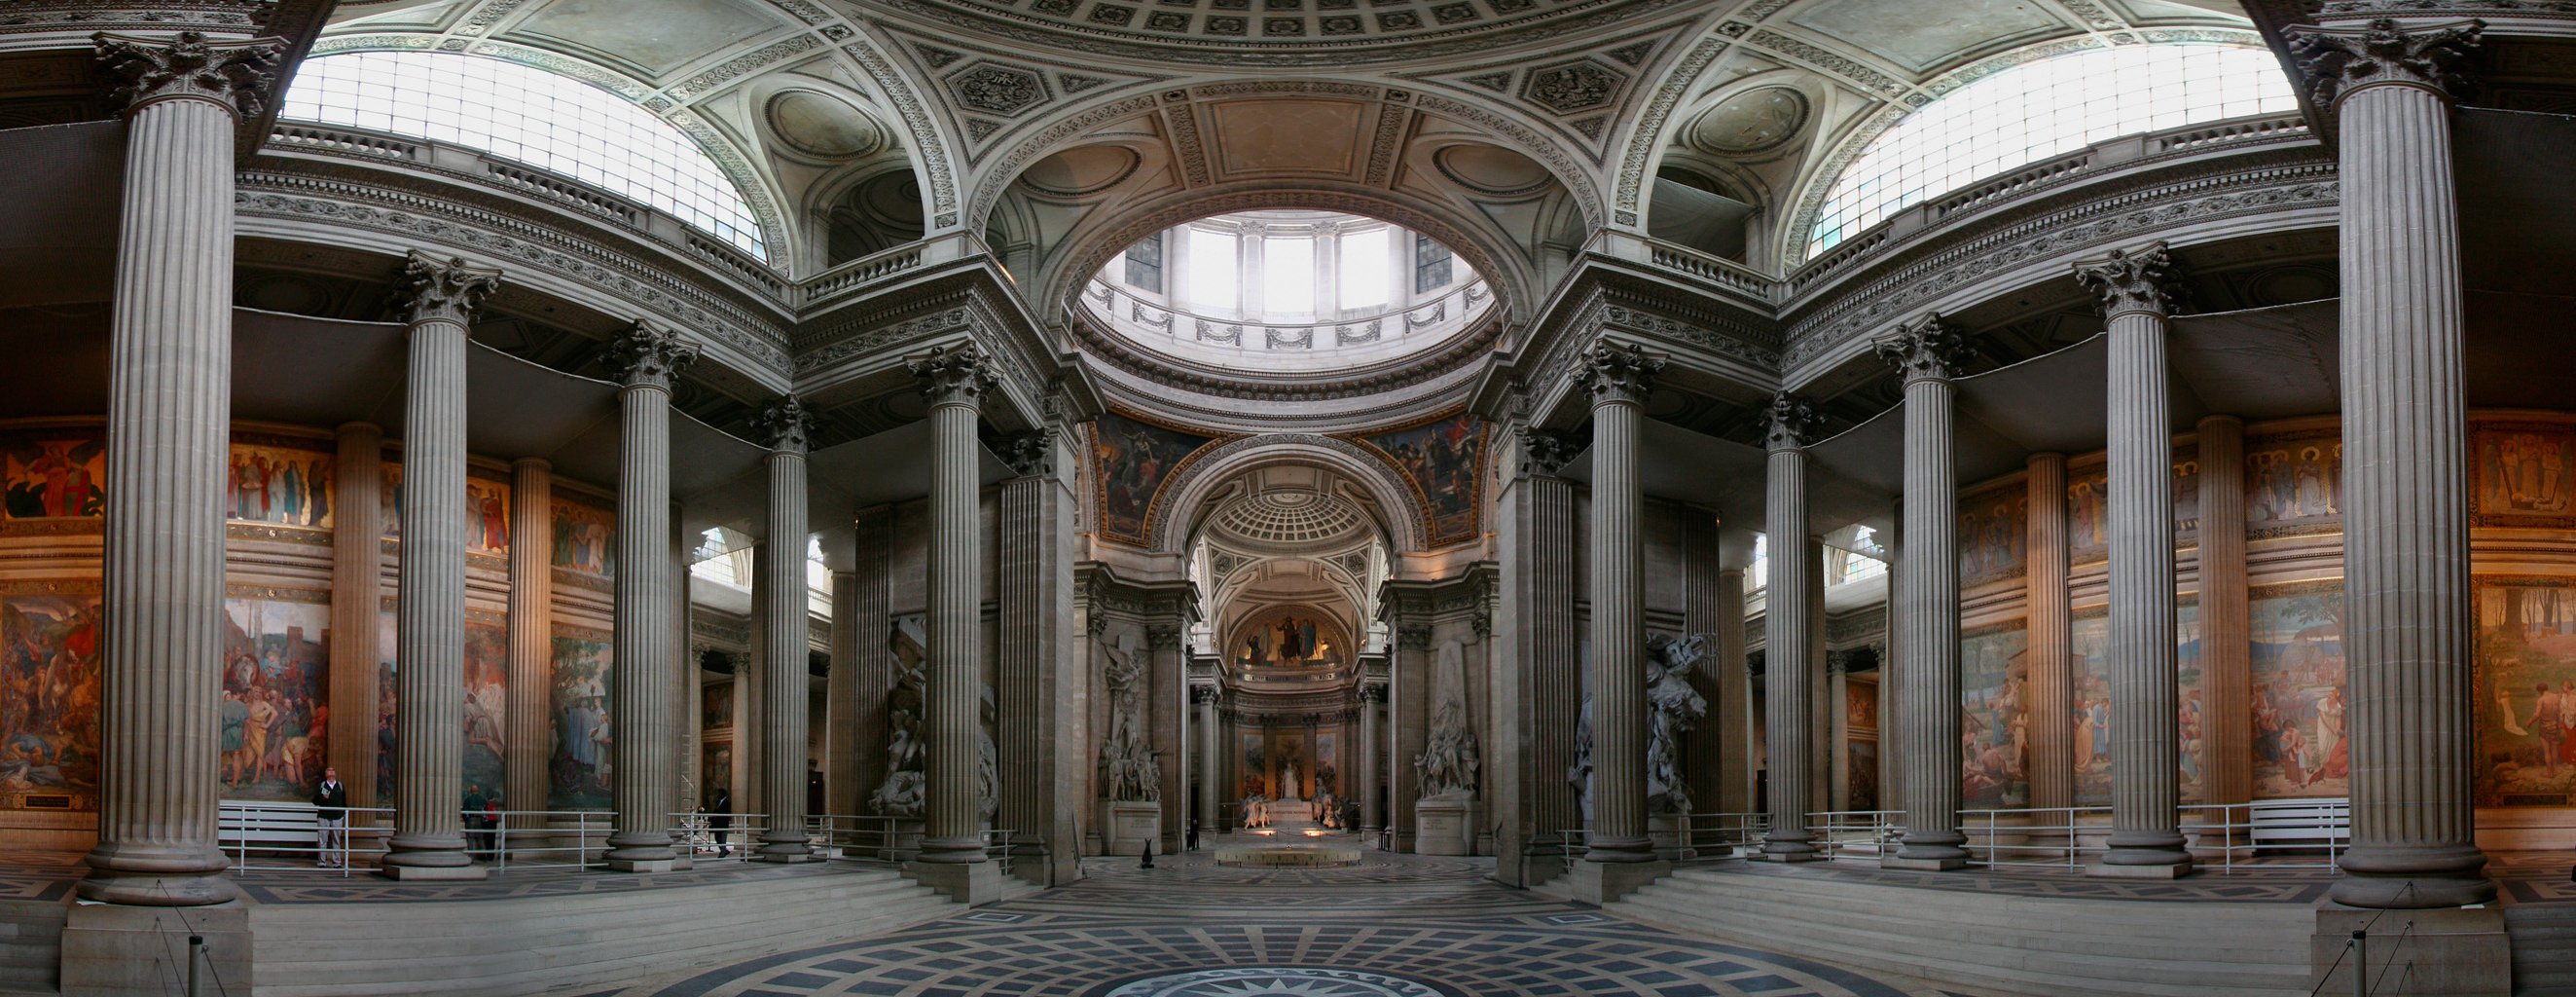 pantheon-paris-interieur.jpg